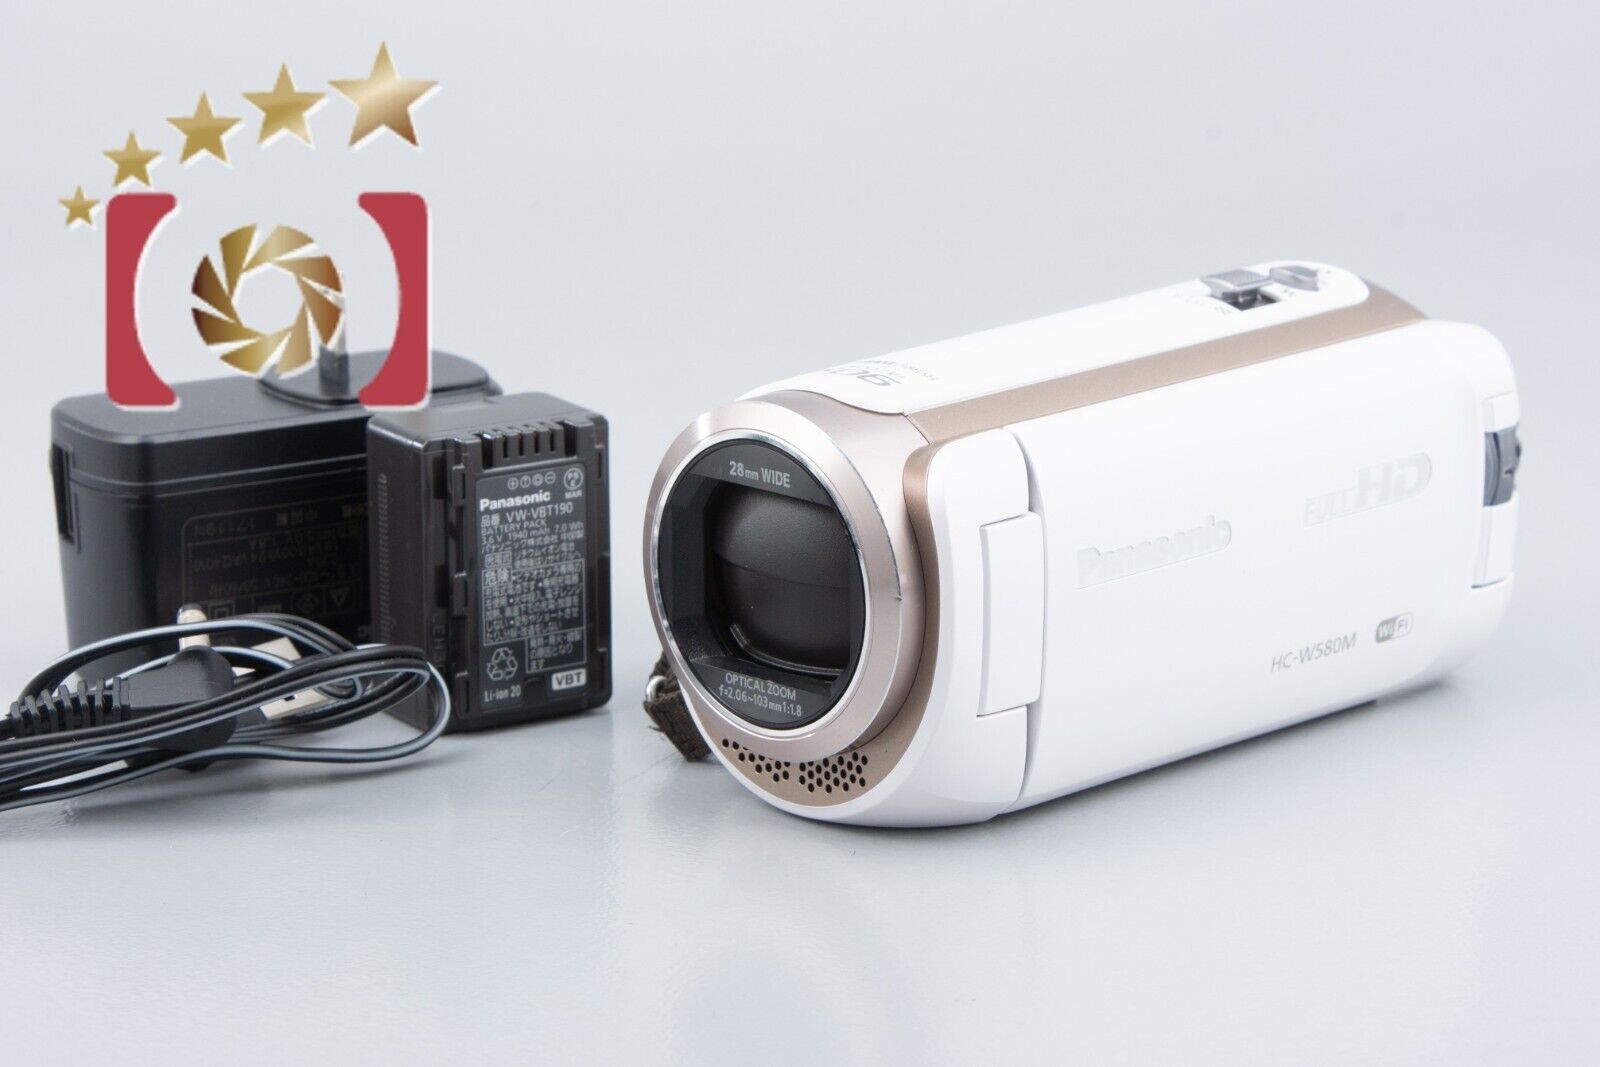 Very Good!! Panasonic HC-W580M White Digital Hi-Vision Video Camera